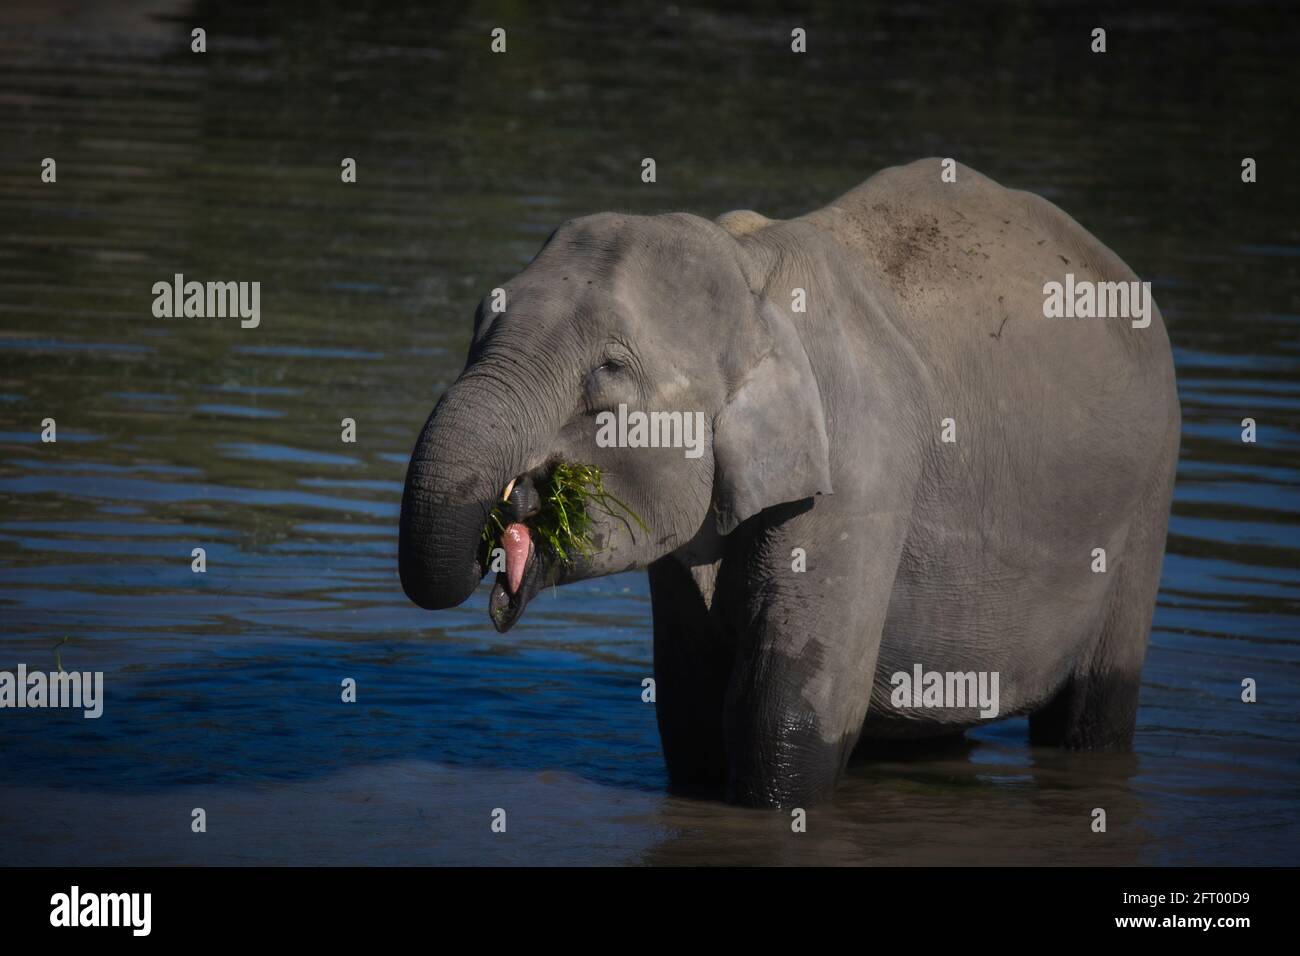 Eléphant asiatique, Elepha maxima indicus, réserve de tigres de Kaziranga, Assam, Inde Banque D'Images